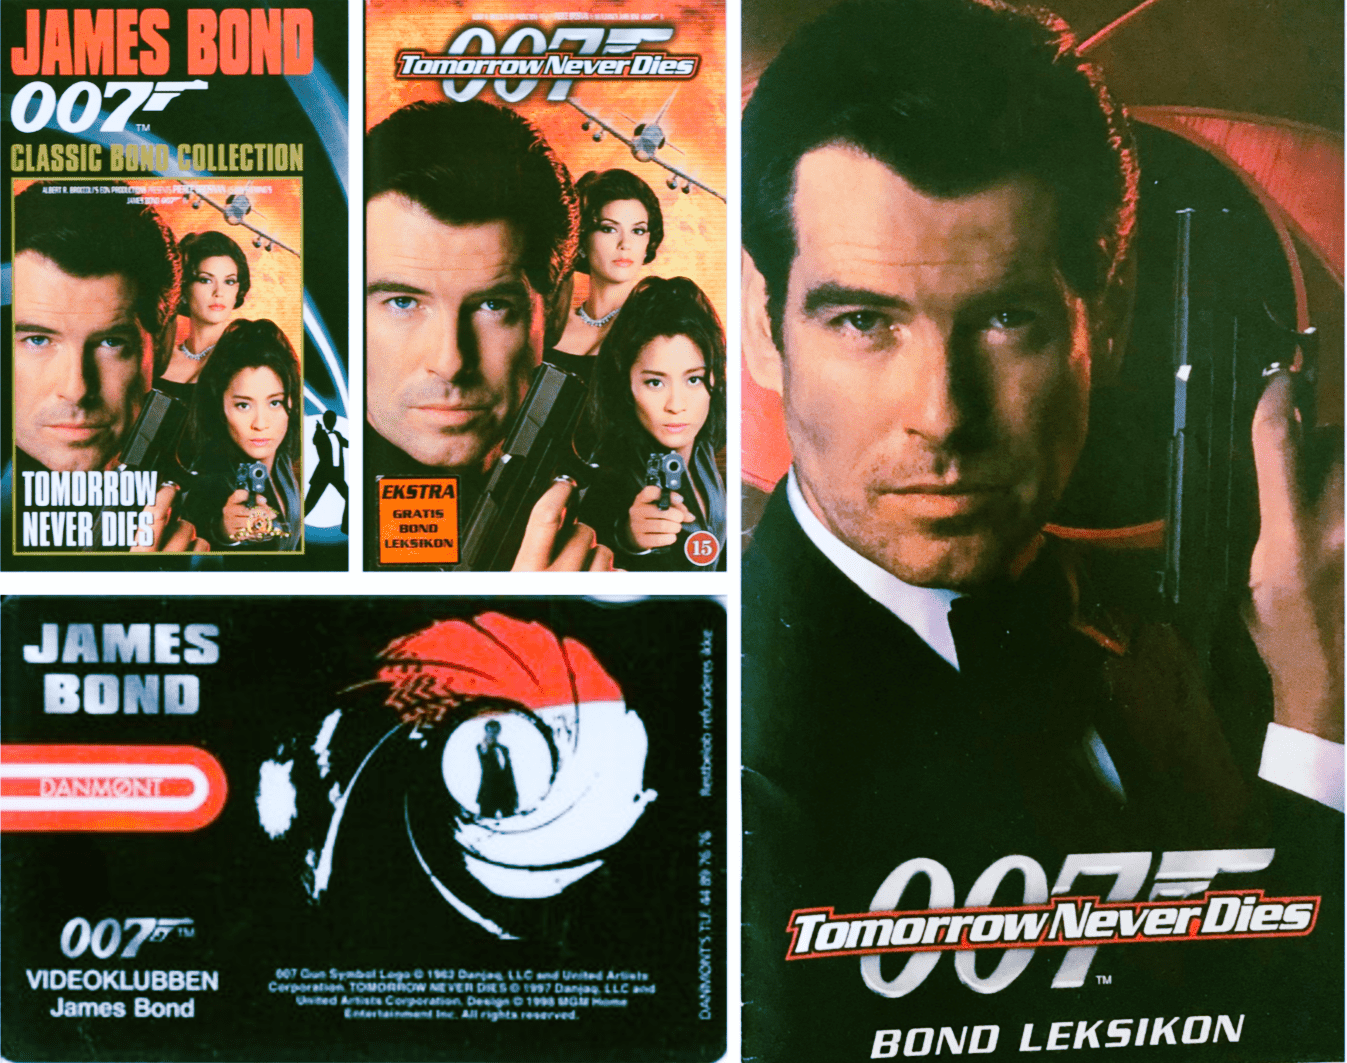 Tomorrow never dies, Pierce Brosnan, Bond 18.